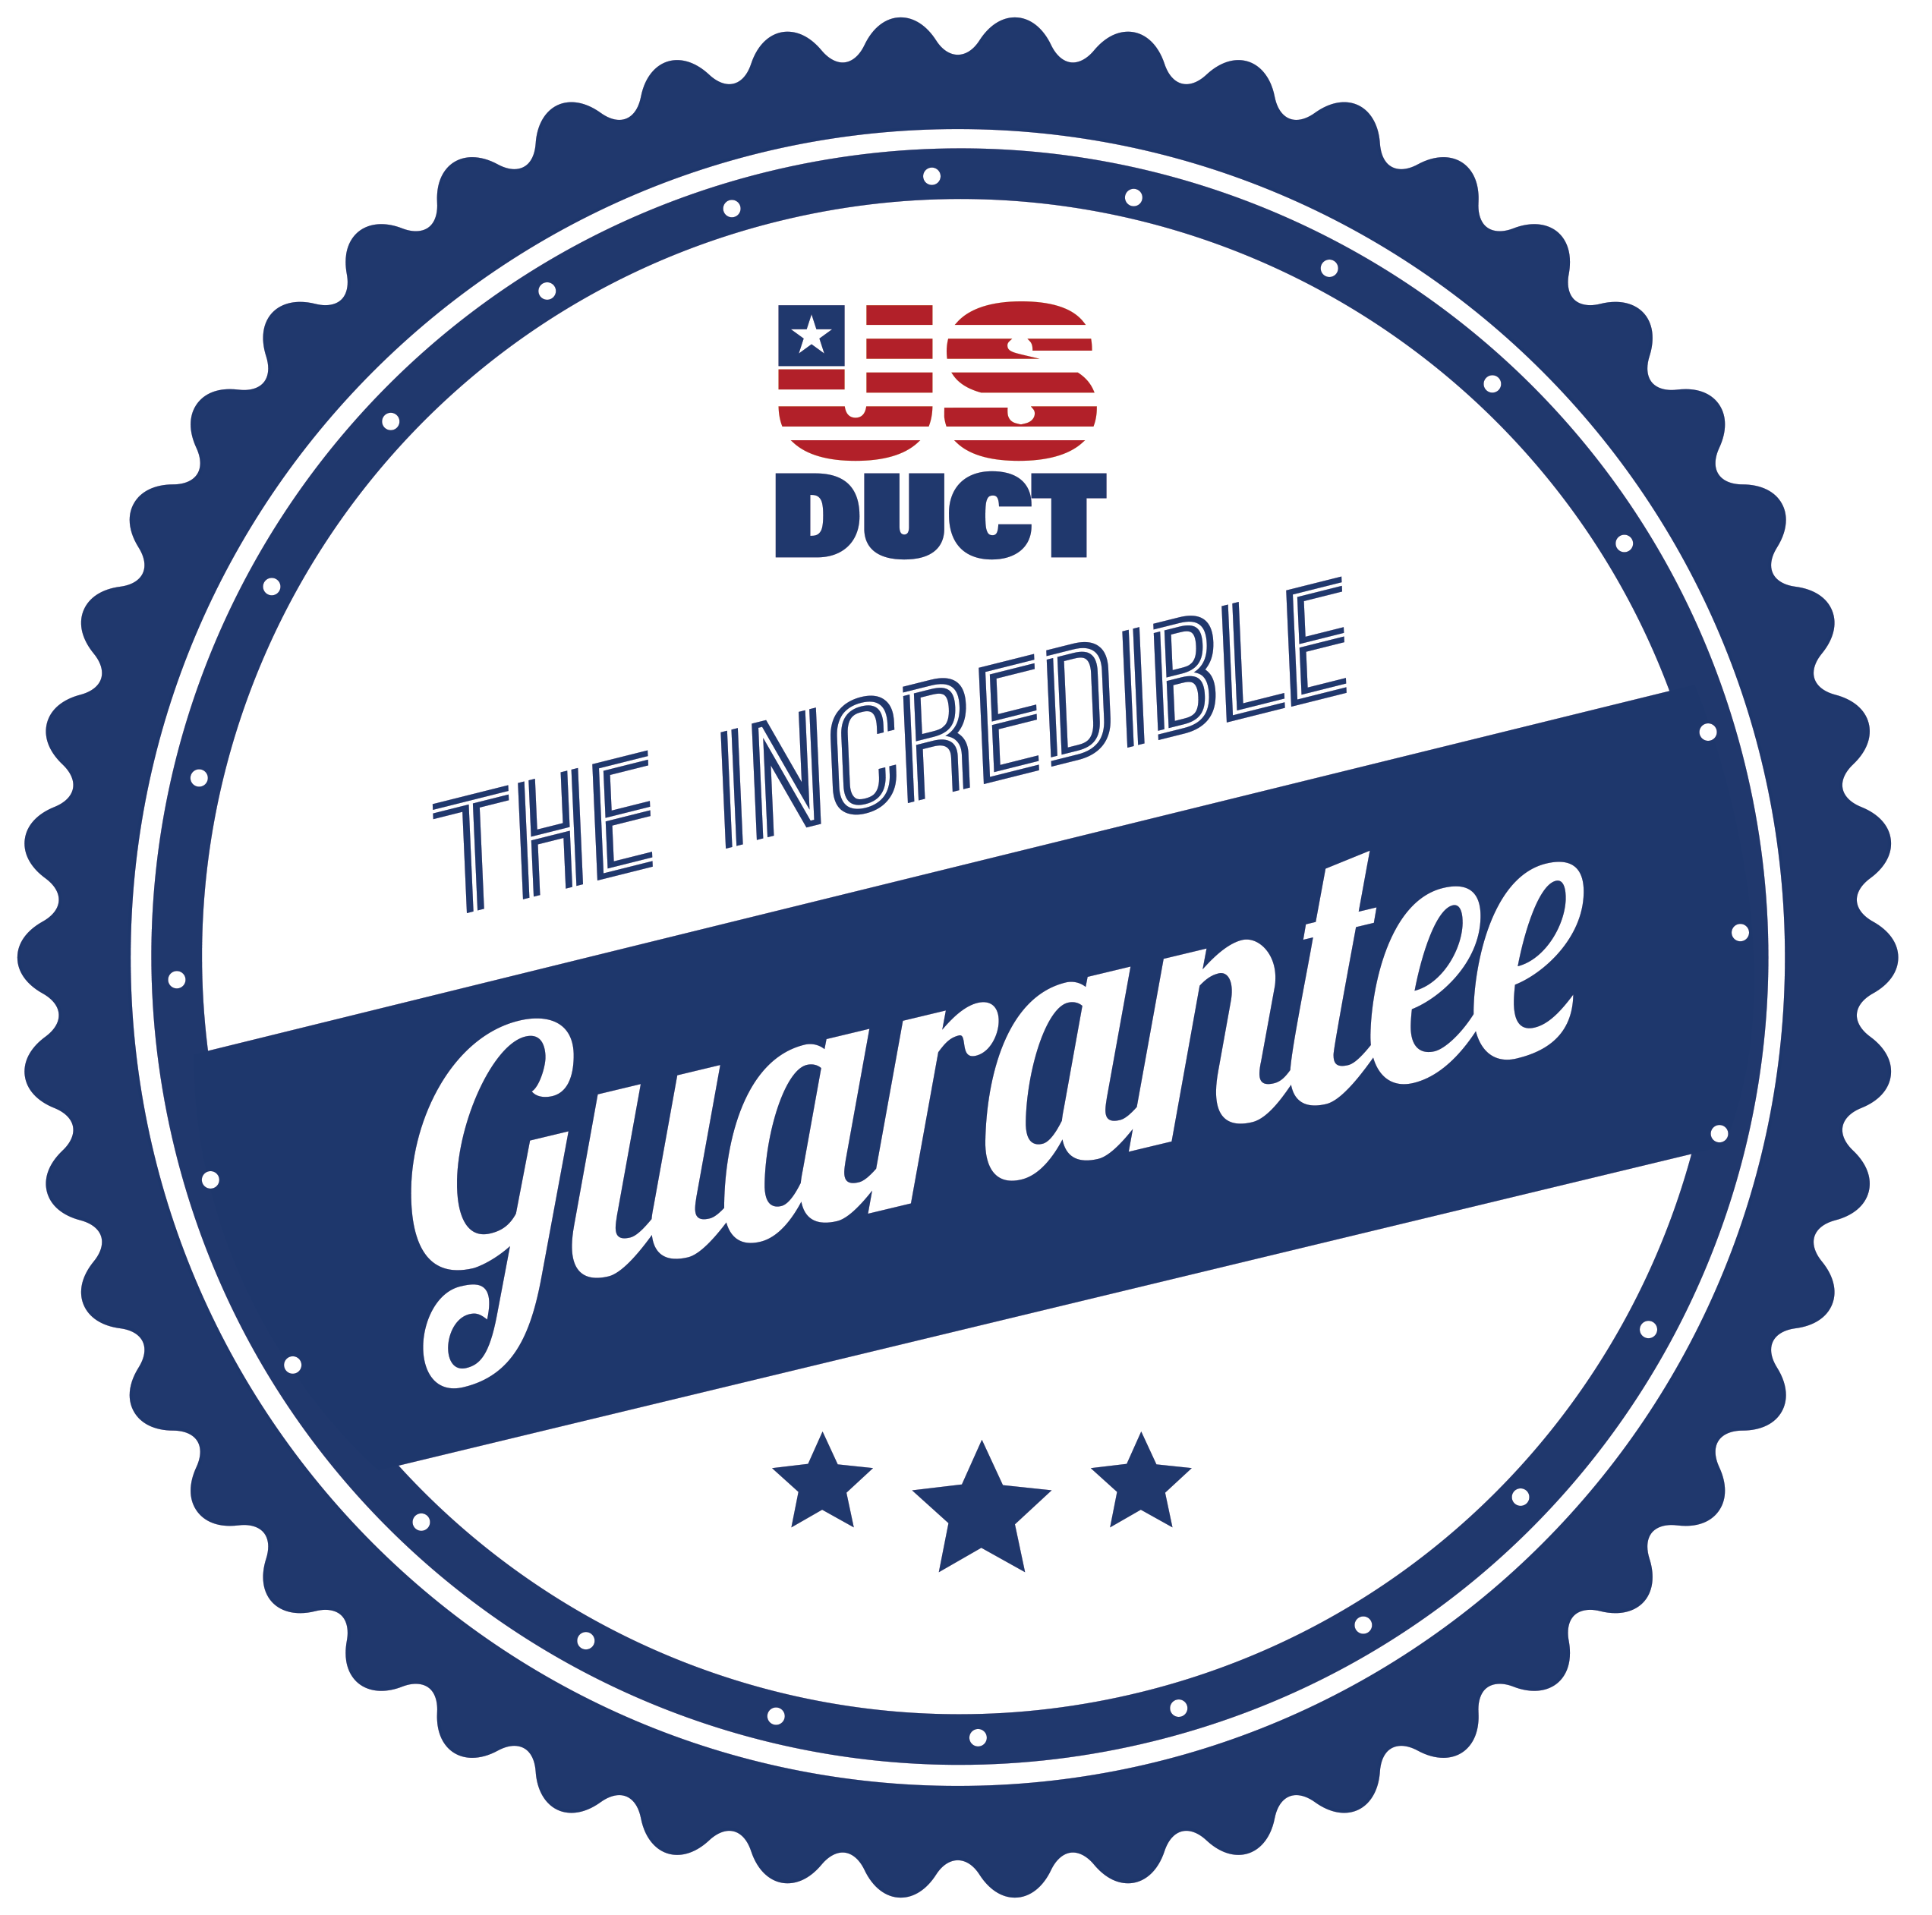 The Incredible Guarantee Seal logo